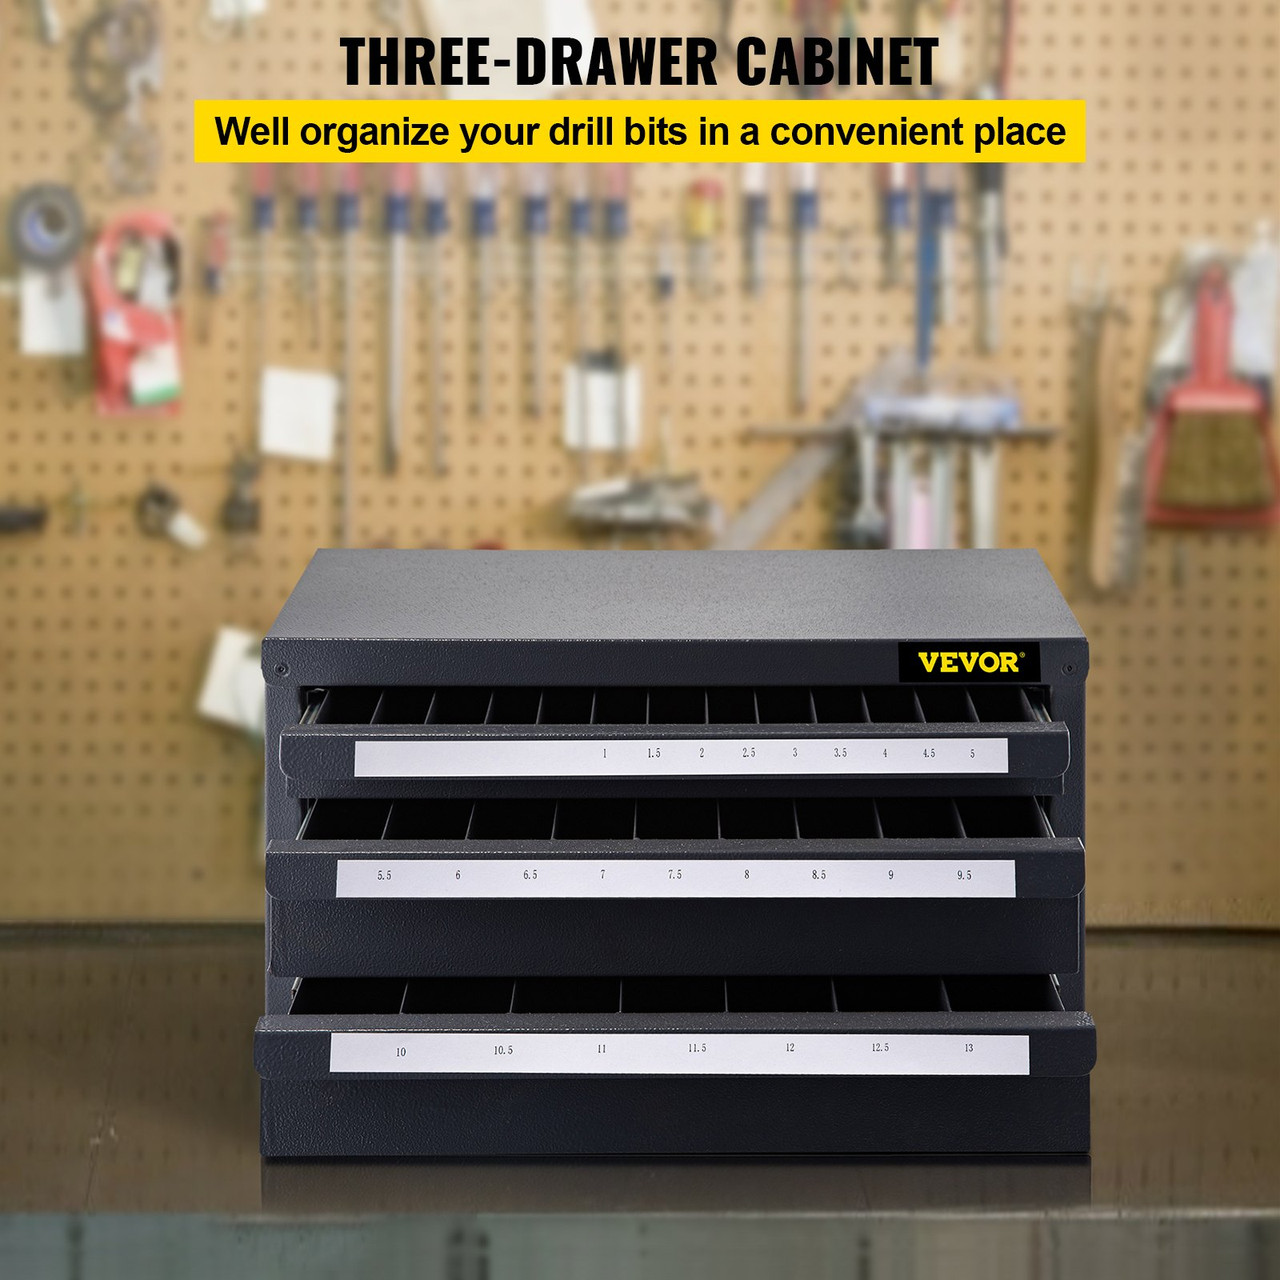 Drill Bit Dispenser Cabinet, Three-Drawer Drill Bit Dispenser, Drill Bit Organizer Cabinet, Drill Dispenser Organizer Cabinet for Metric Sizes 1-13 mm/0.04-0.51 inch in 0.5 mm/0.02" Increments